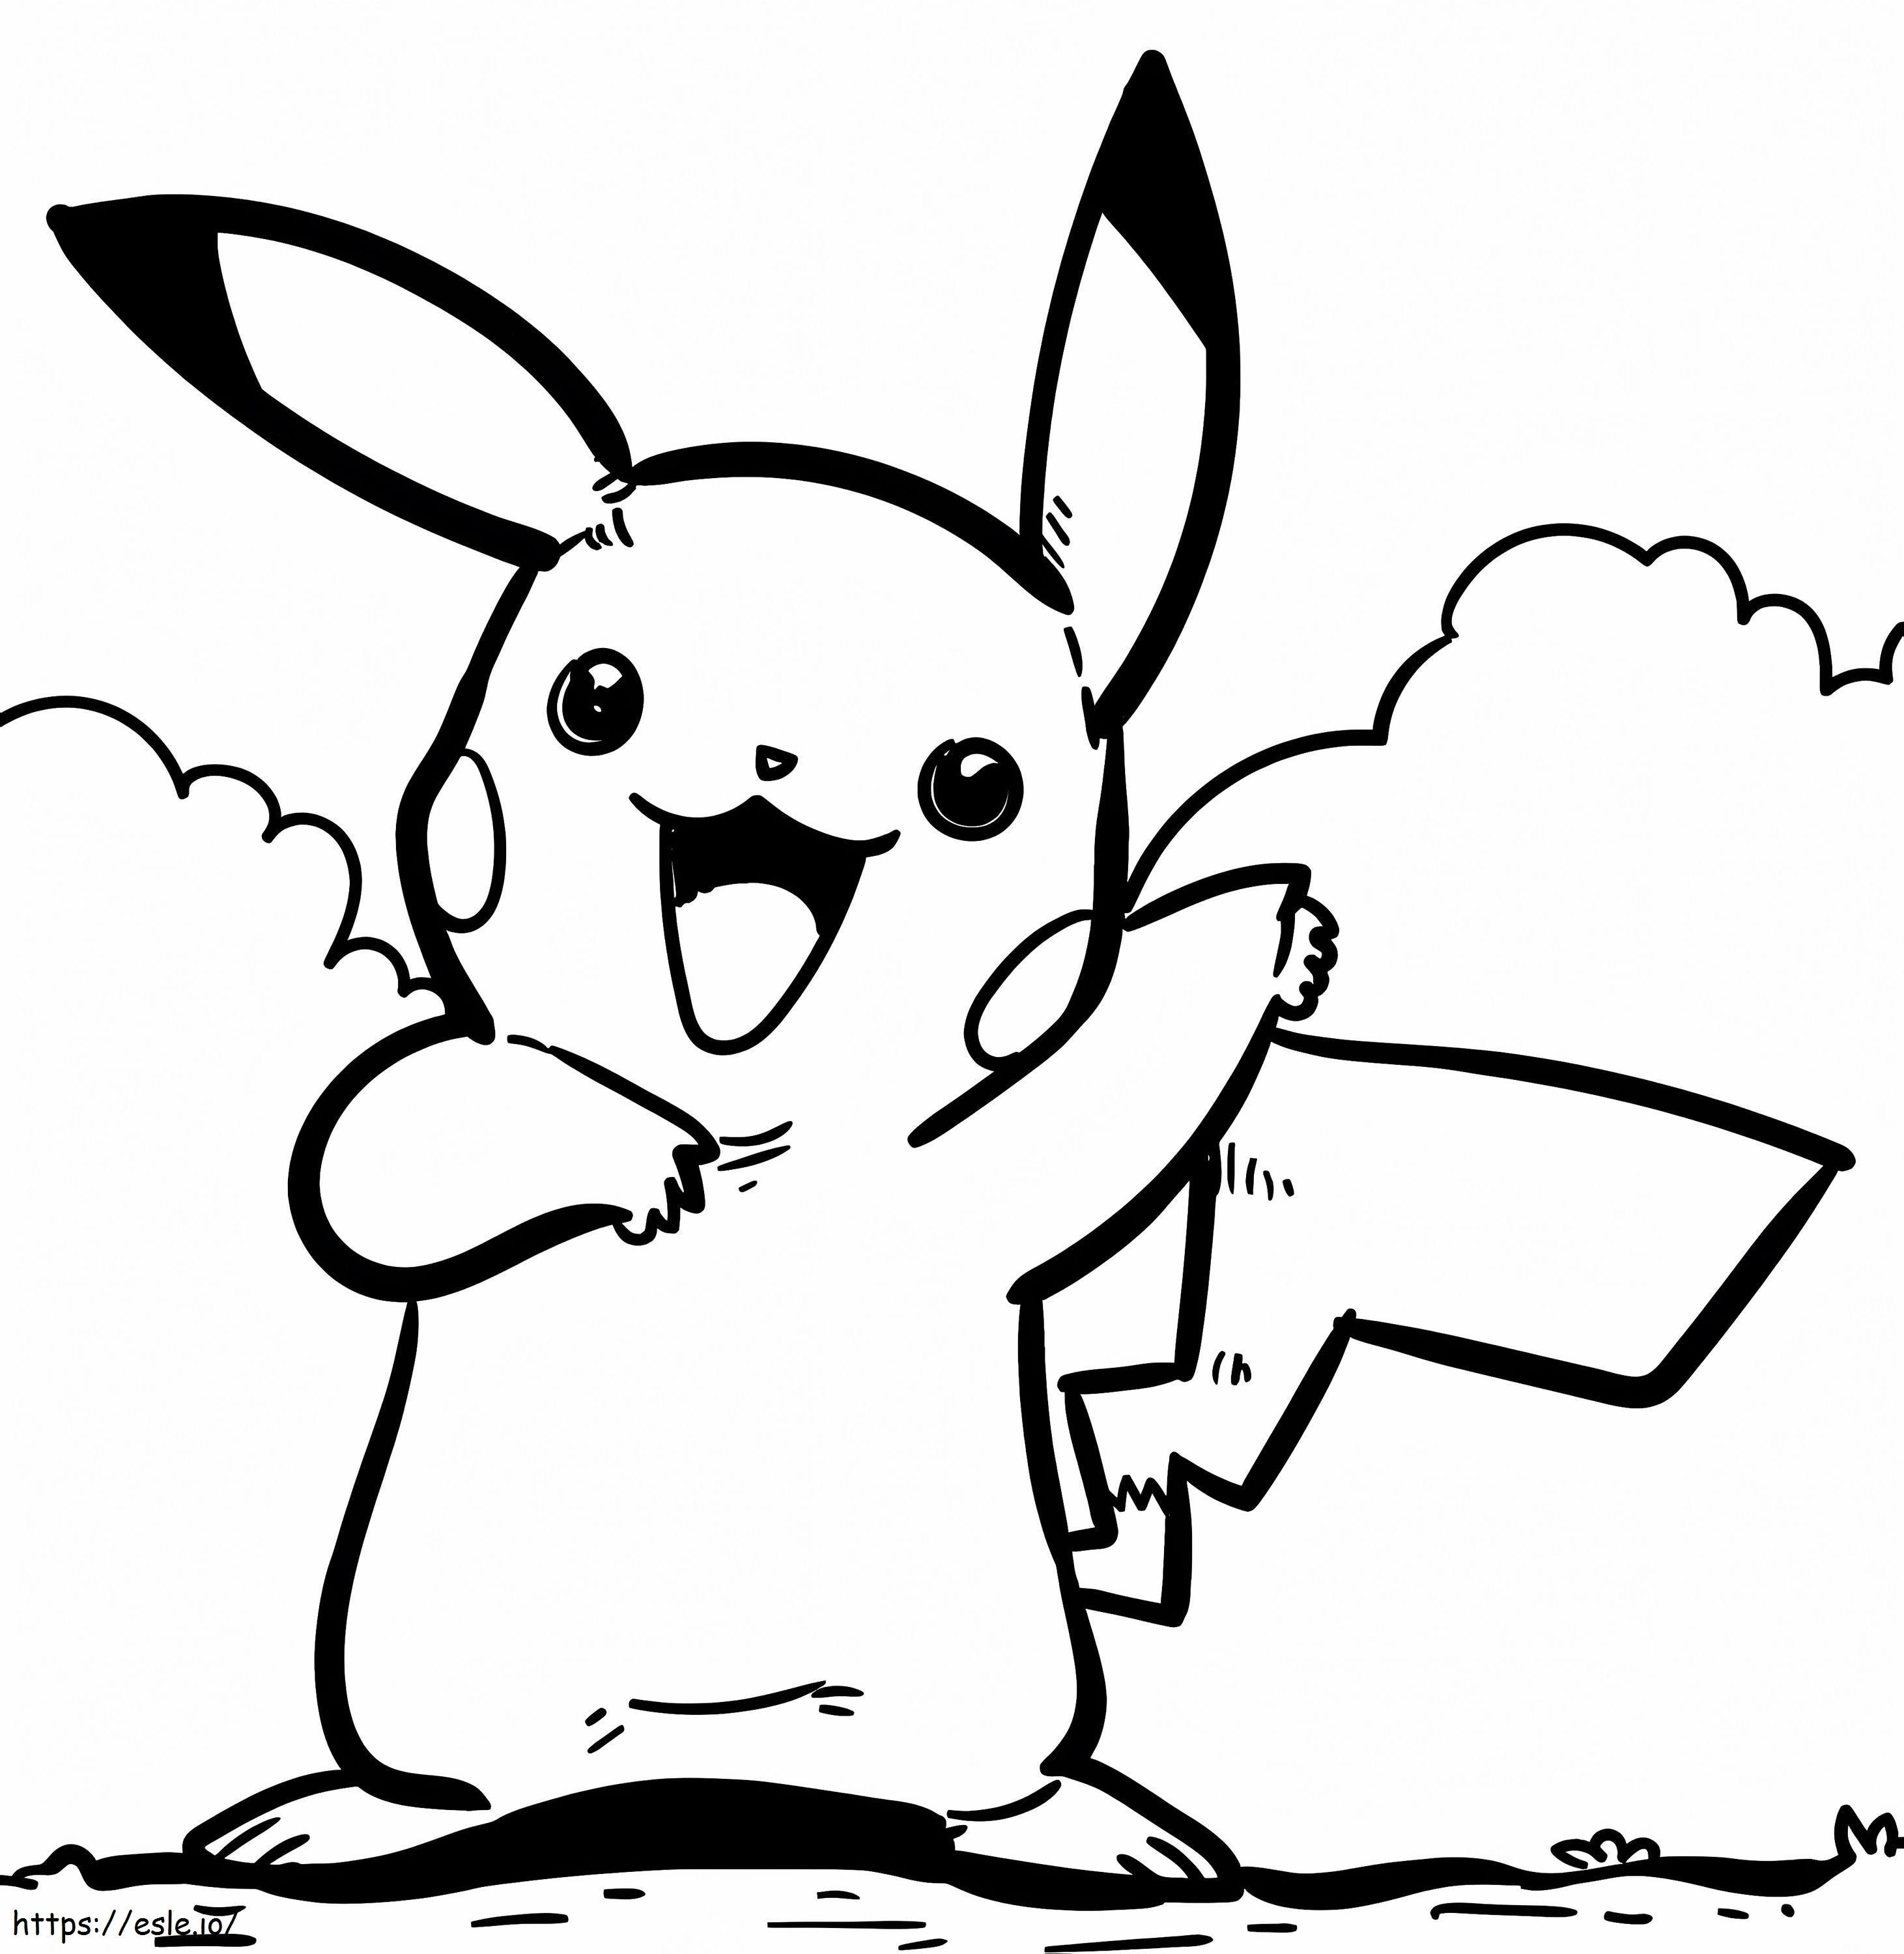 Pele de Pikachu – Páginas para colorir imprimíveis gratuitas